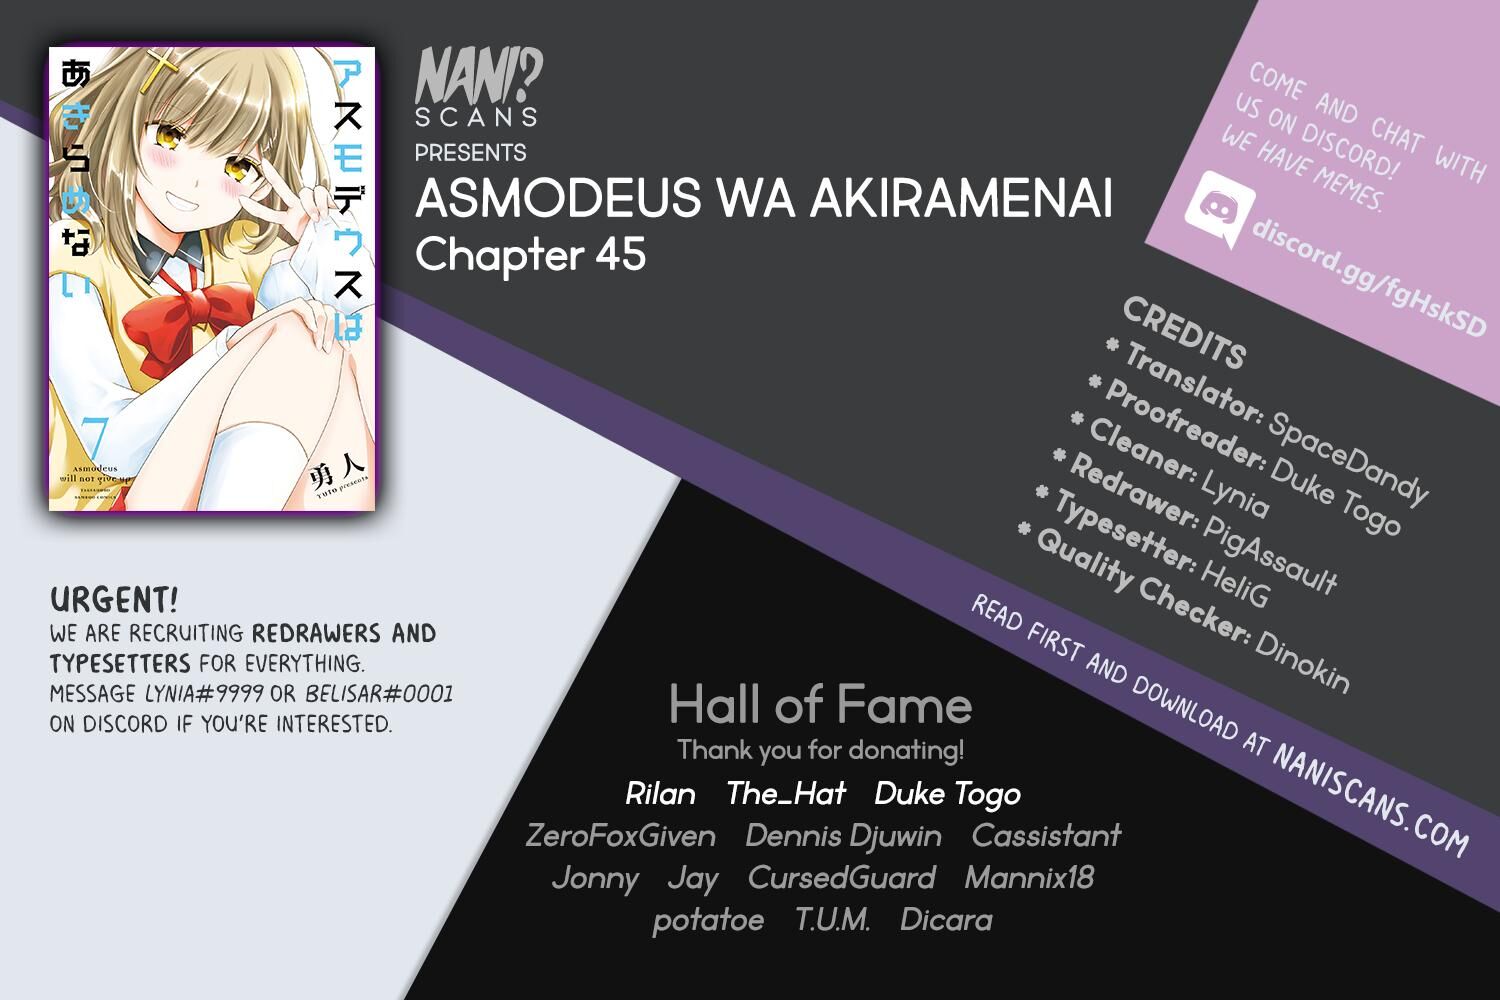 Asmodeus wa Akiramenai 45